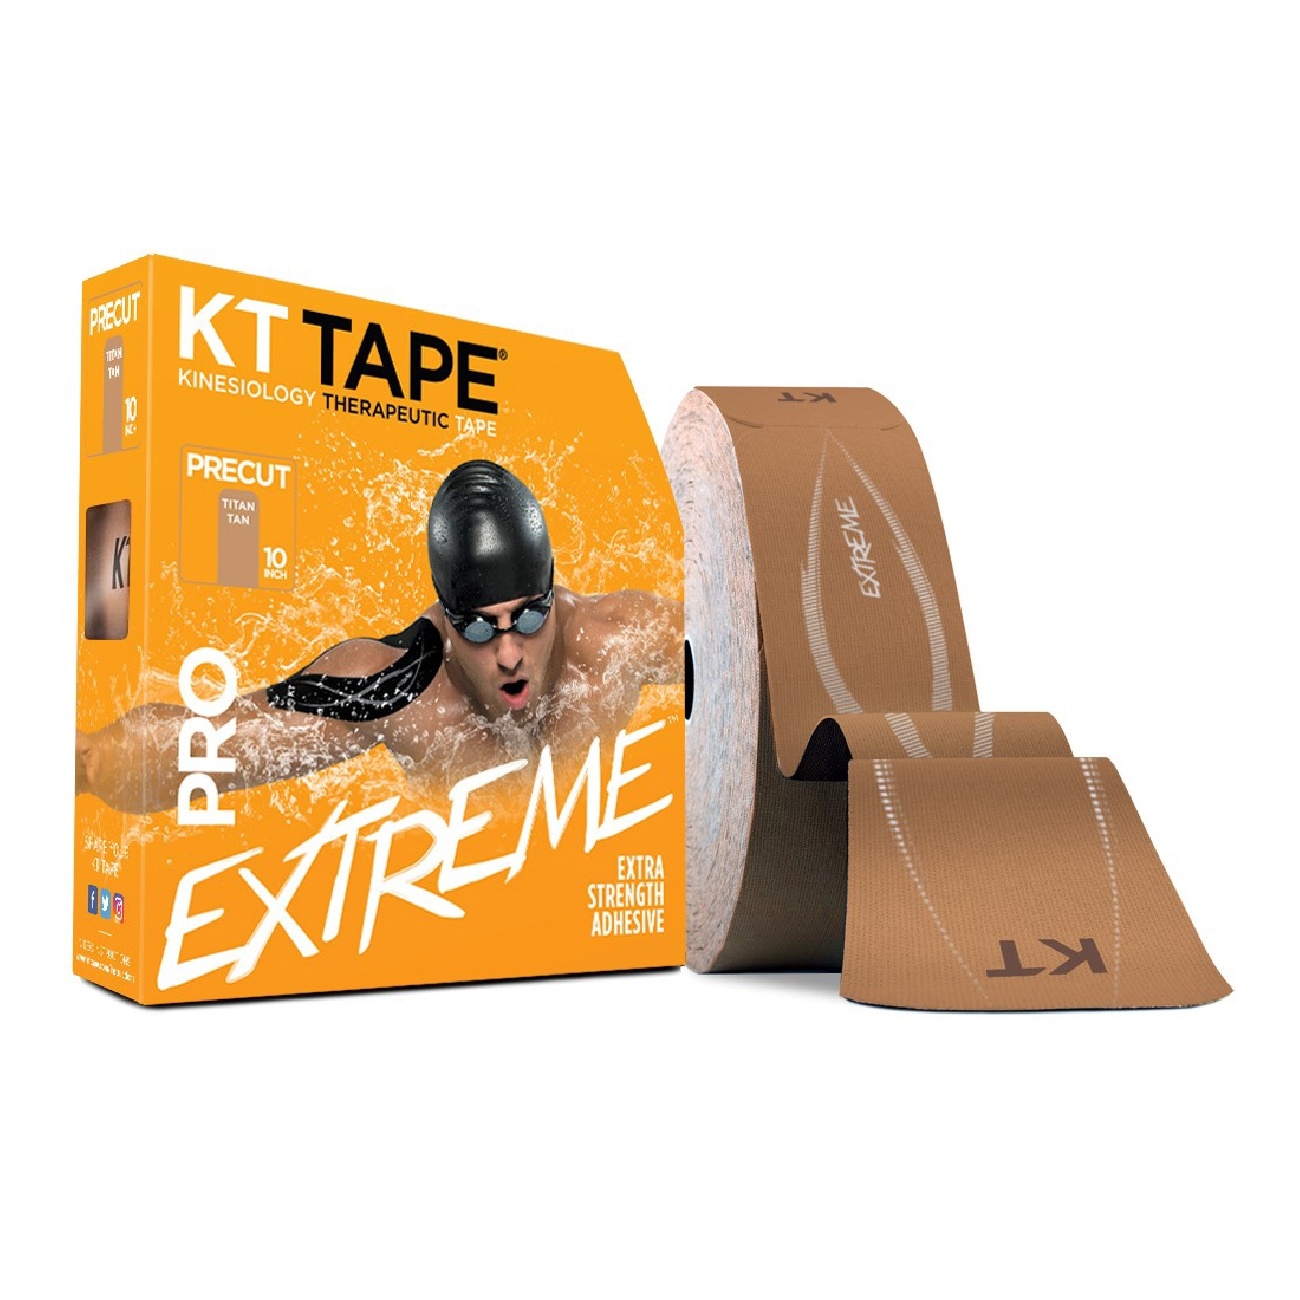 KT Tape PRO Extreme Jumbo Roll - Titan Tan Main